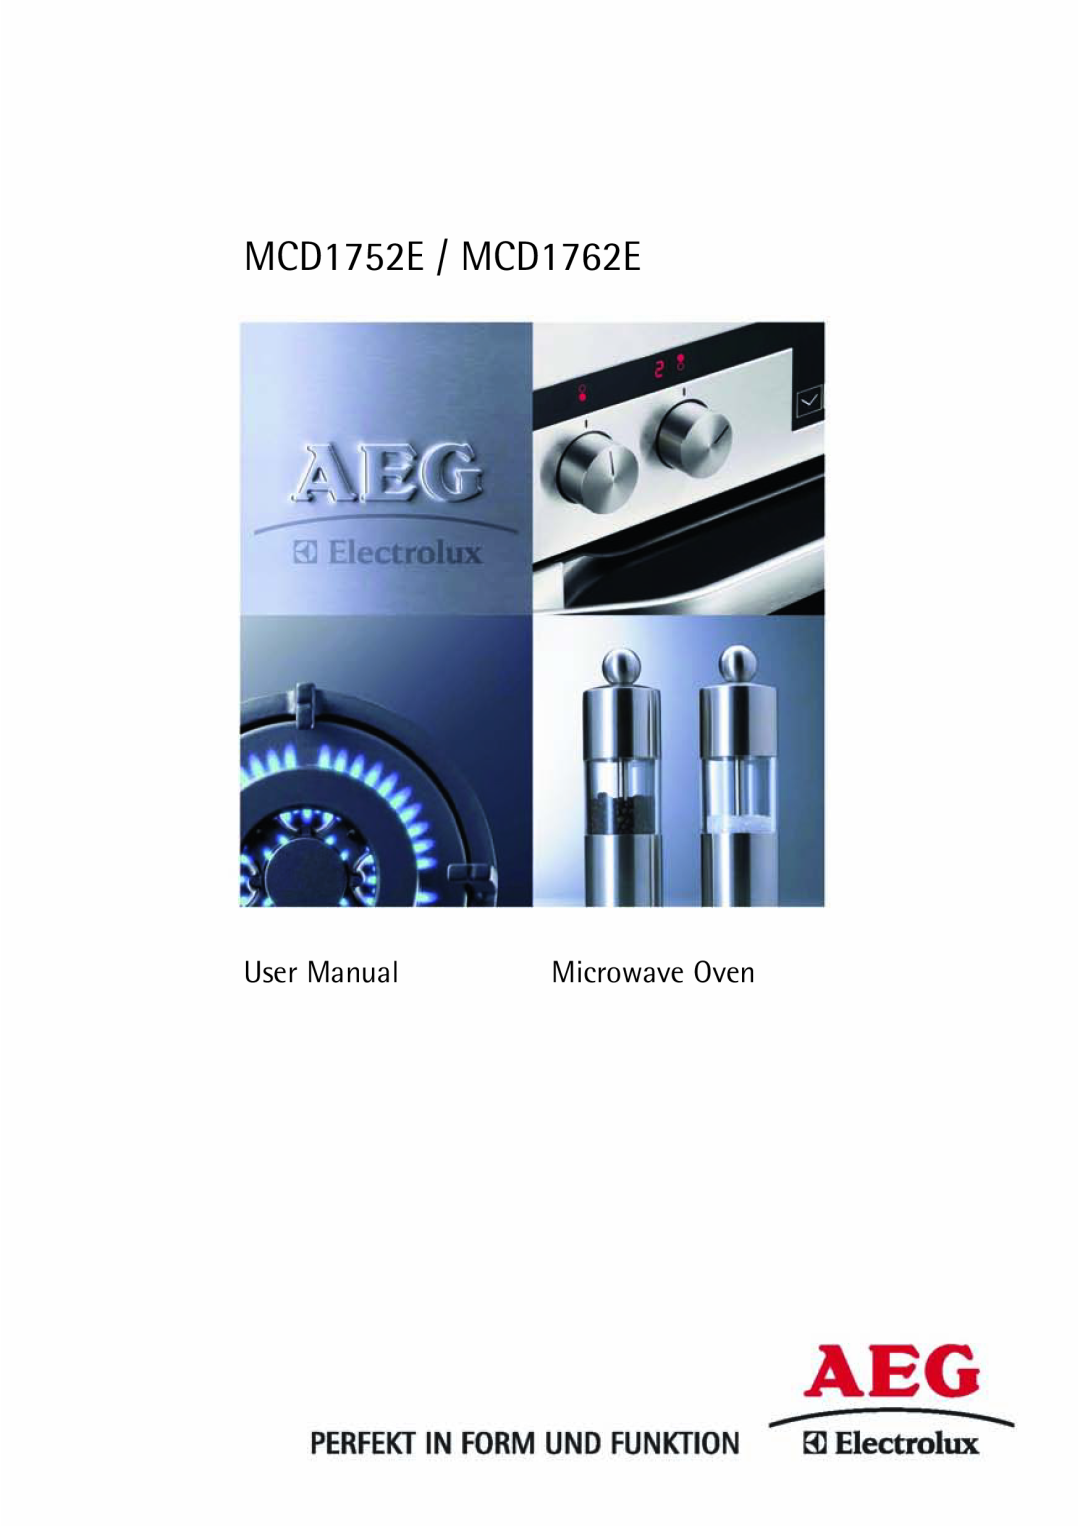 Electrolux user manual MCD1752E / MCD1762E, User Manual, Microwave Oven 